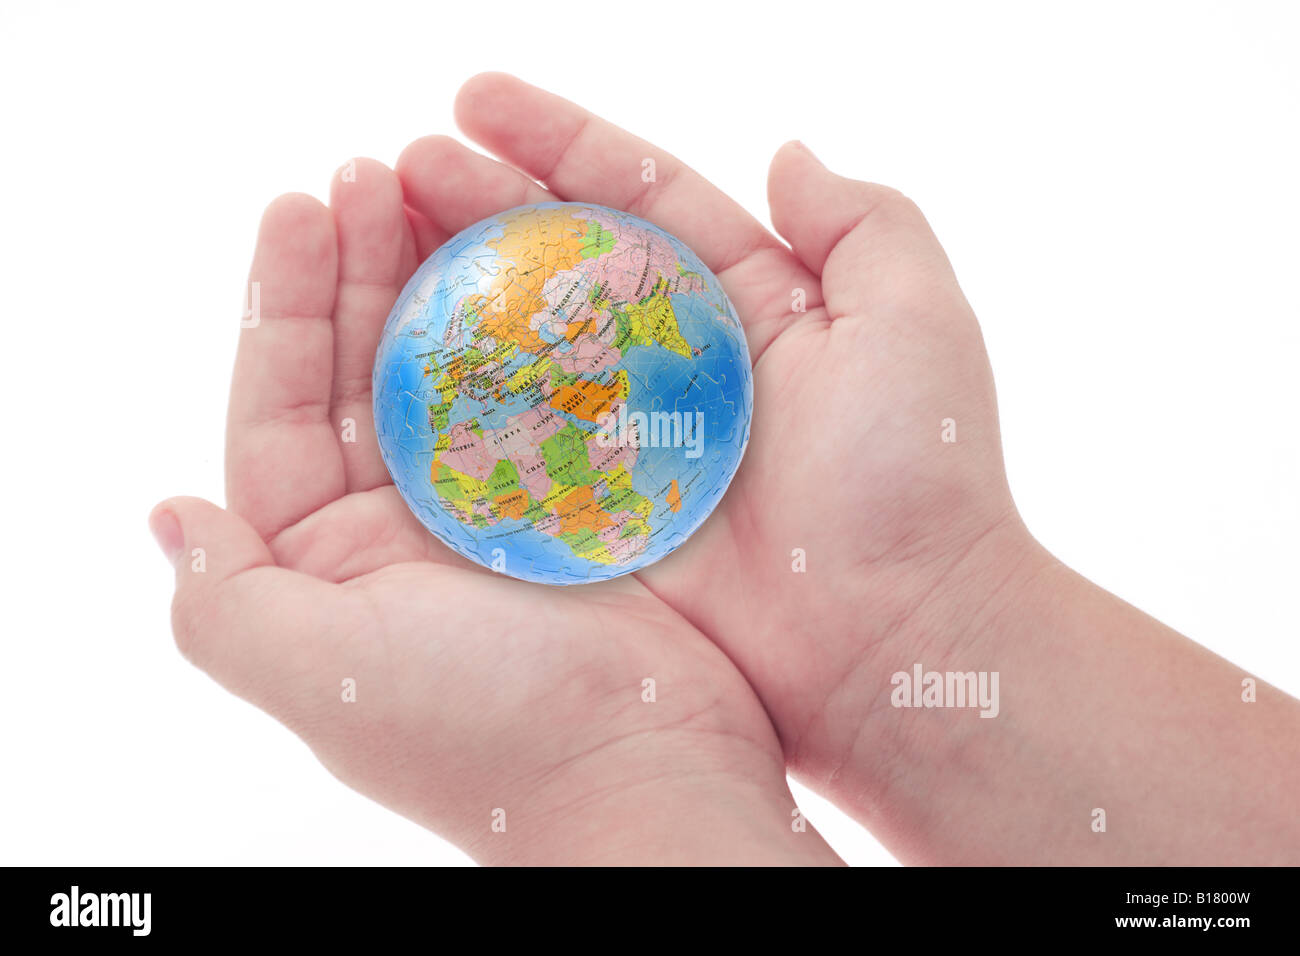 Child s hands holding Jigsaw puzzle globe on white background Stock Photo